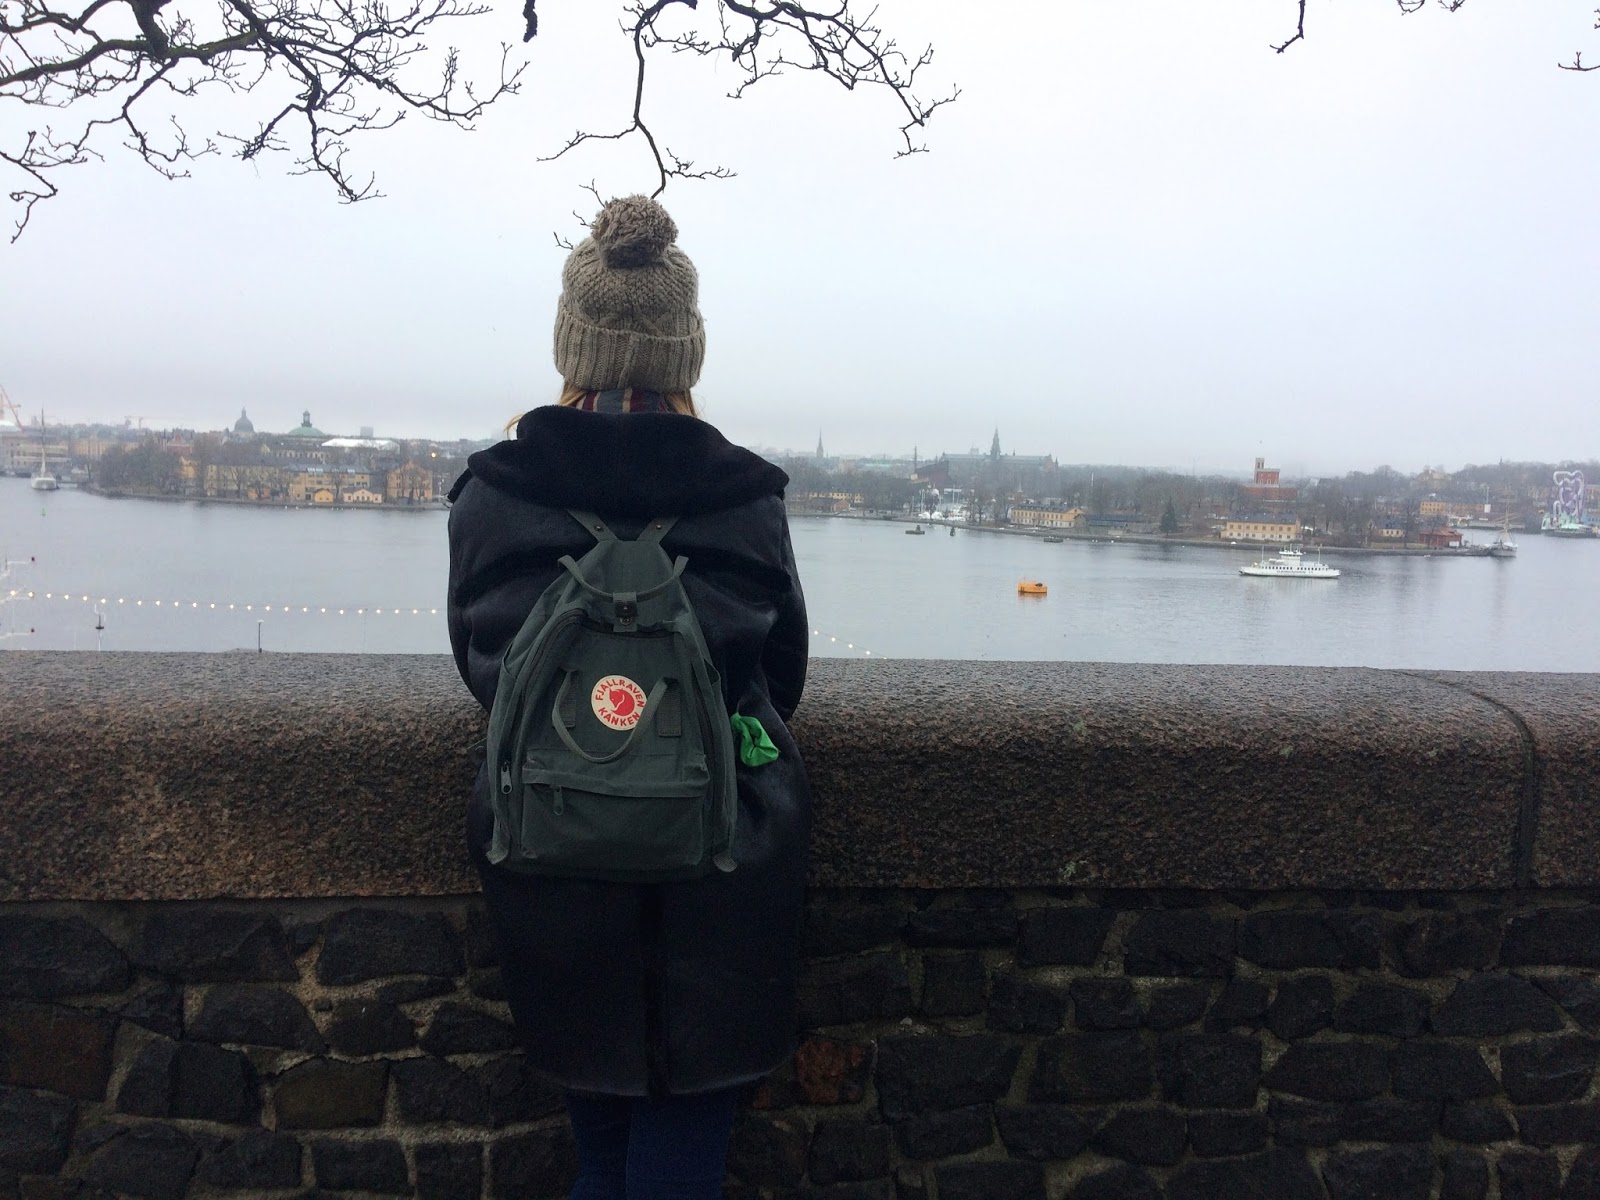 Explorer stood by the river in Stockholm with Kanken backpack